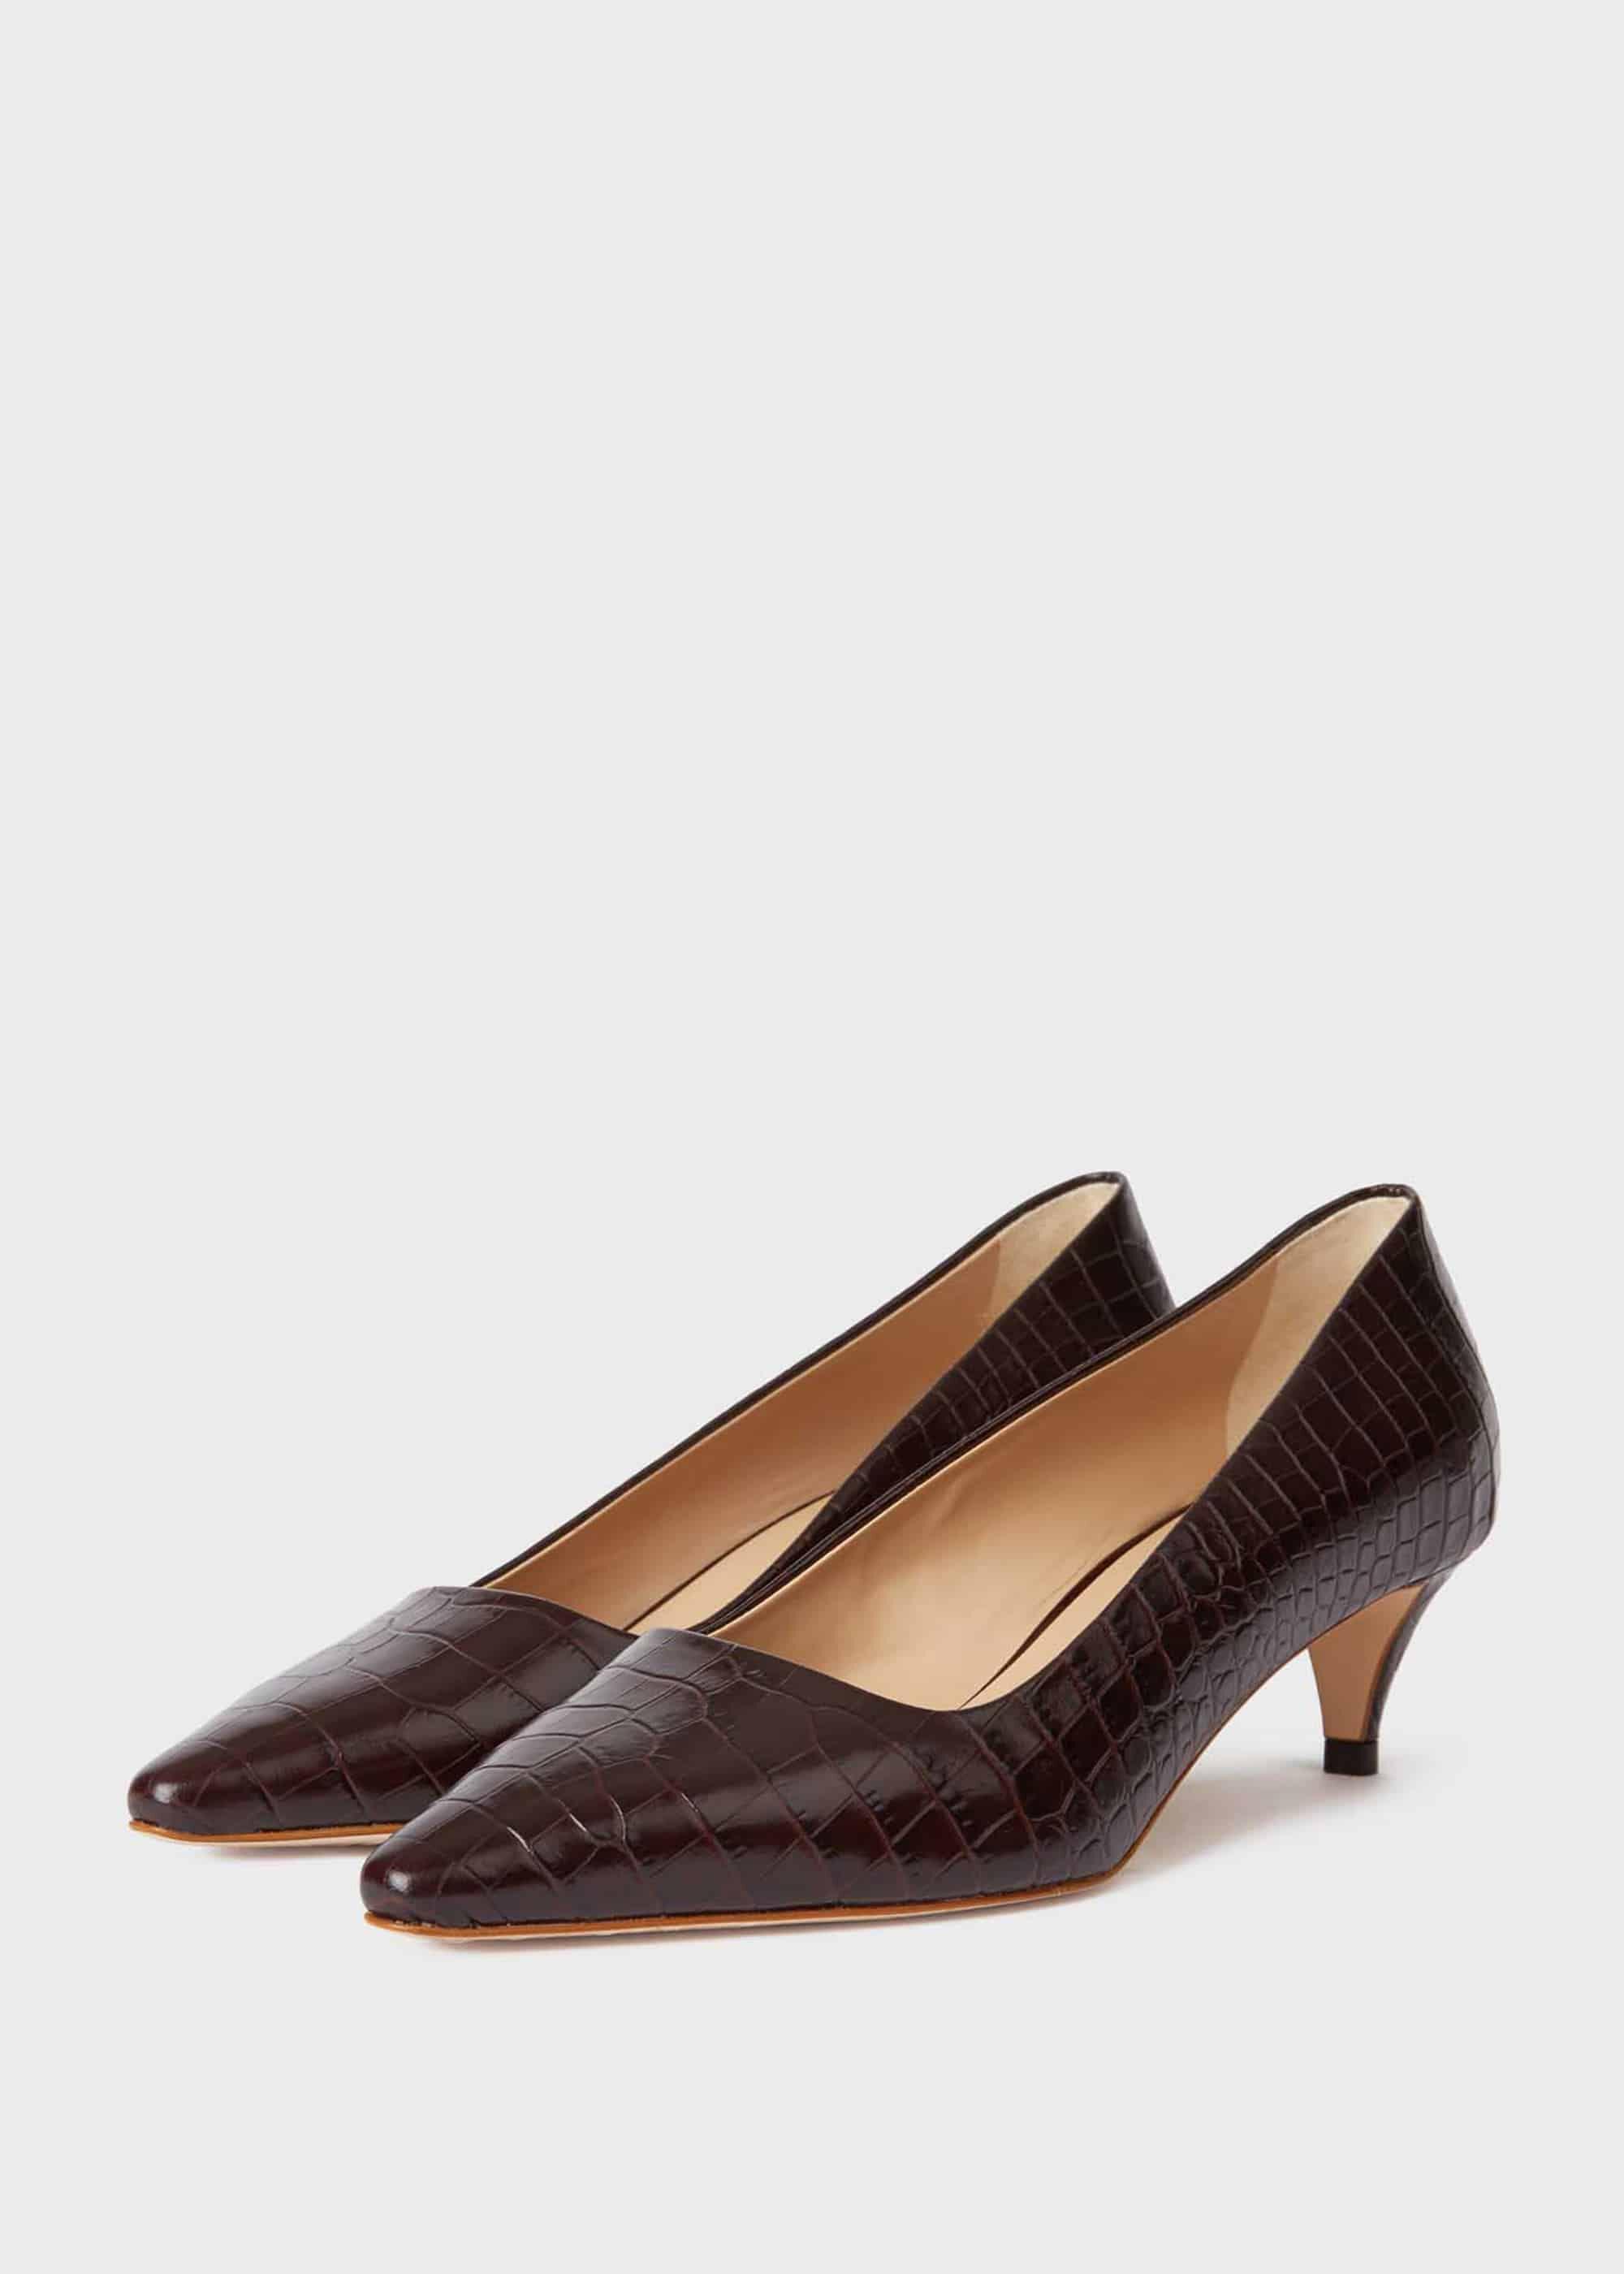 Hobbs Millie Crocodile Kitten Heel Court Shoes in Brown | Lyst